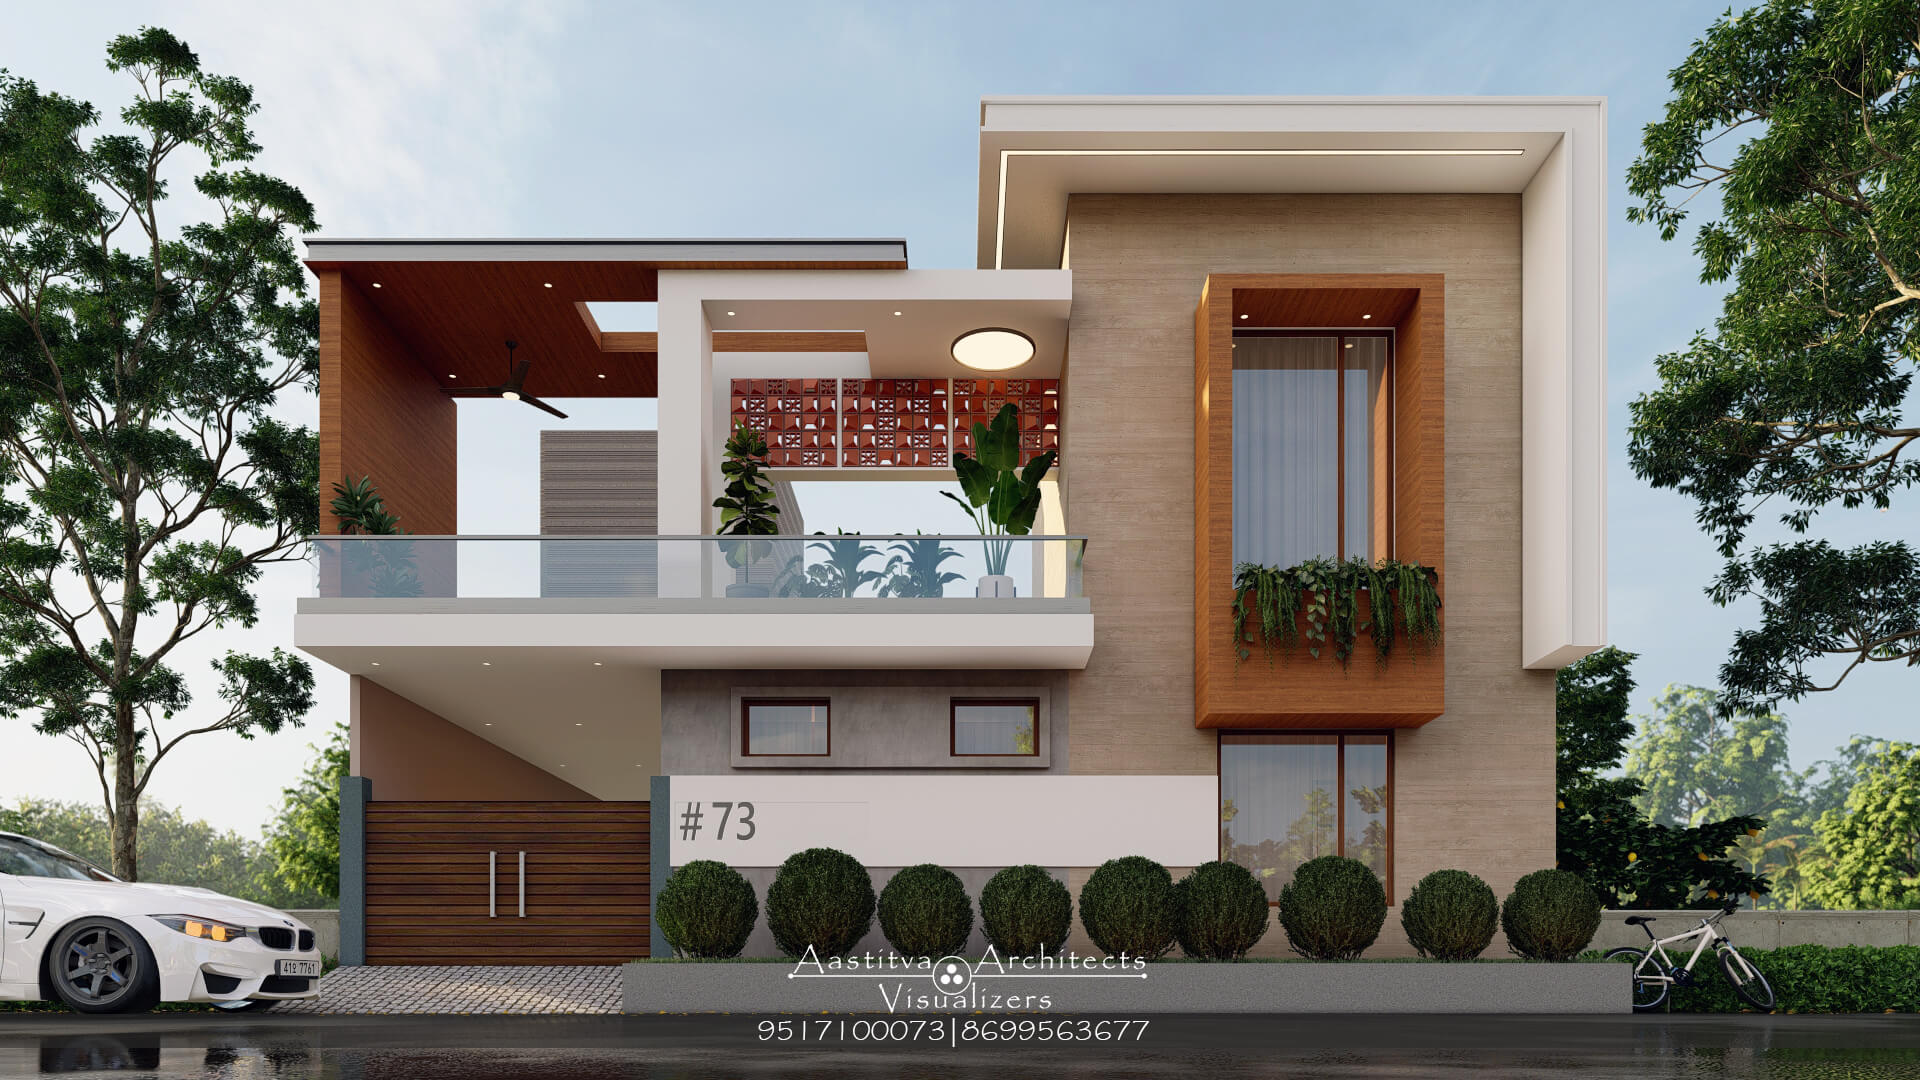 20 Exterior Design Ideas for Your Home. - Aastitva